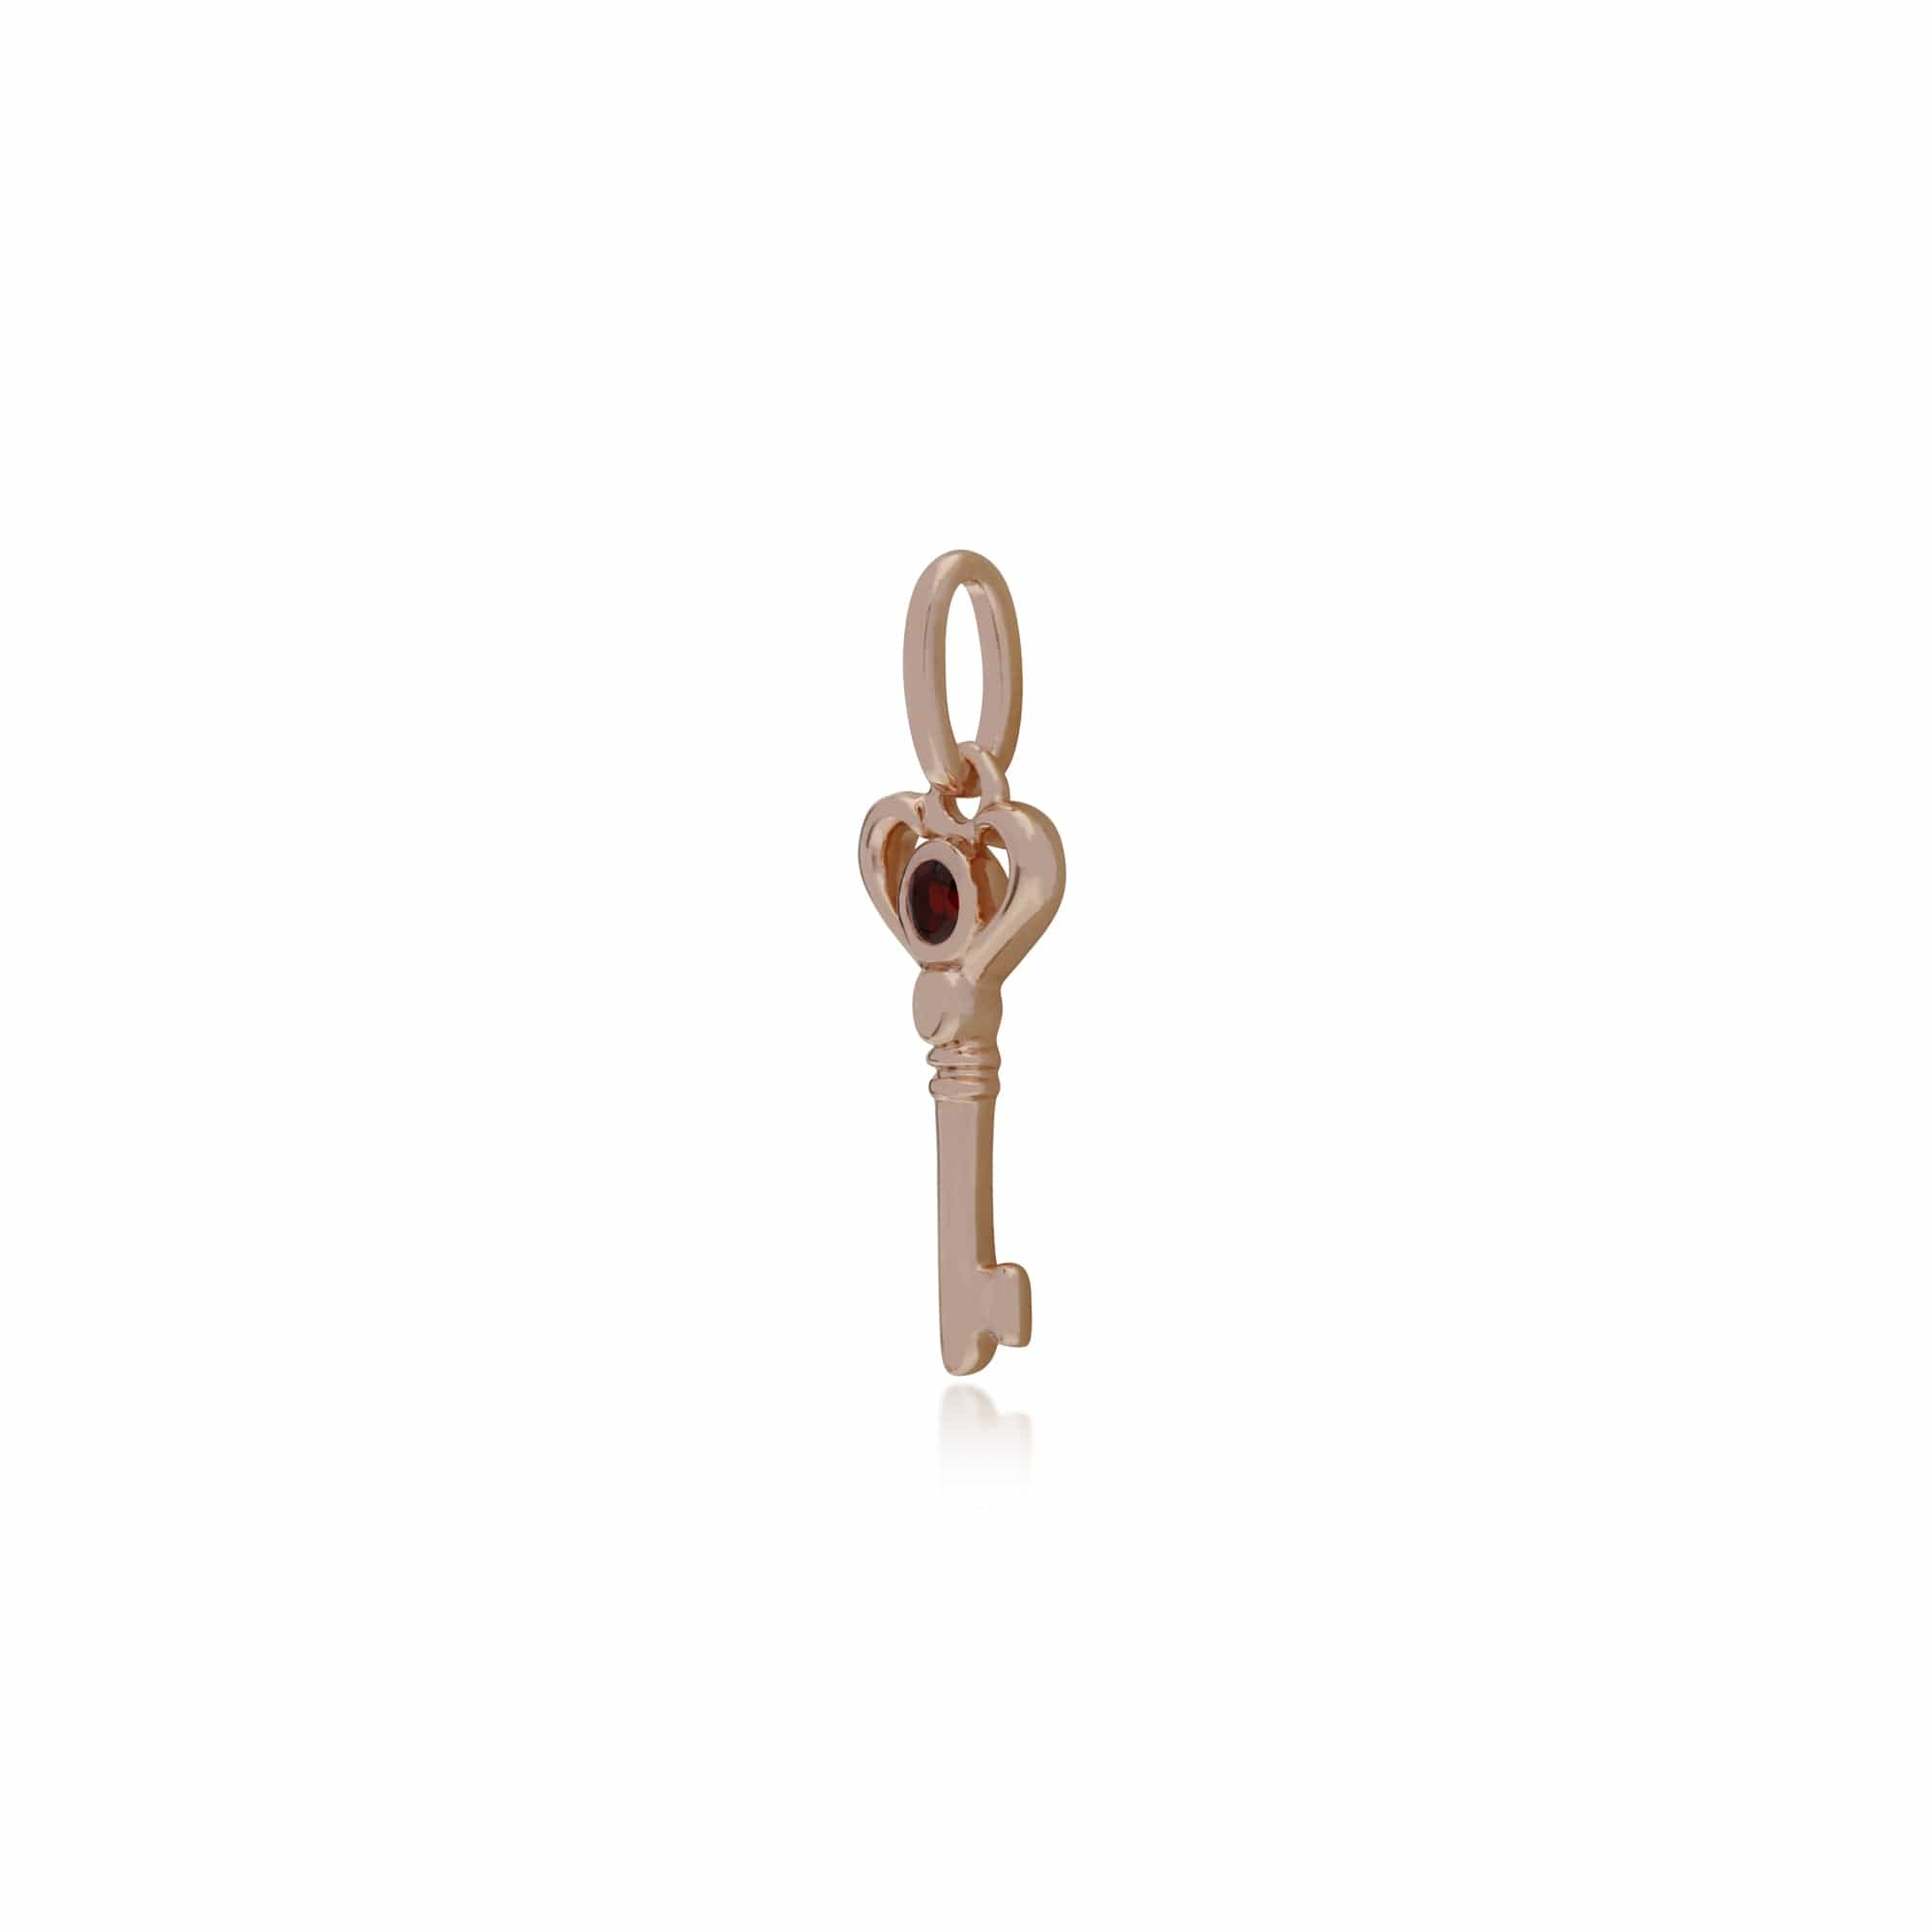 Gemondo Rose Gold Plated Sterling Silver Garnet Small Key Charm - Gemondo